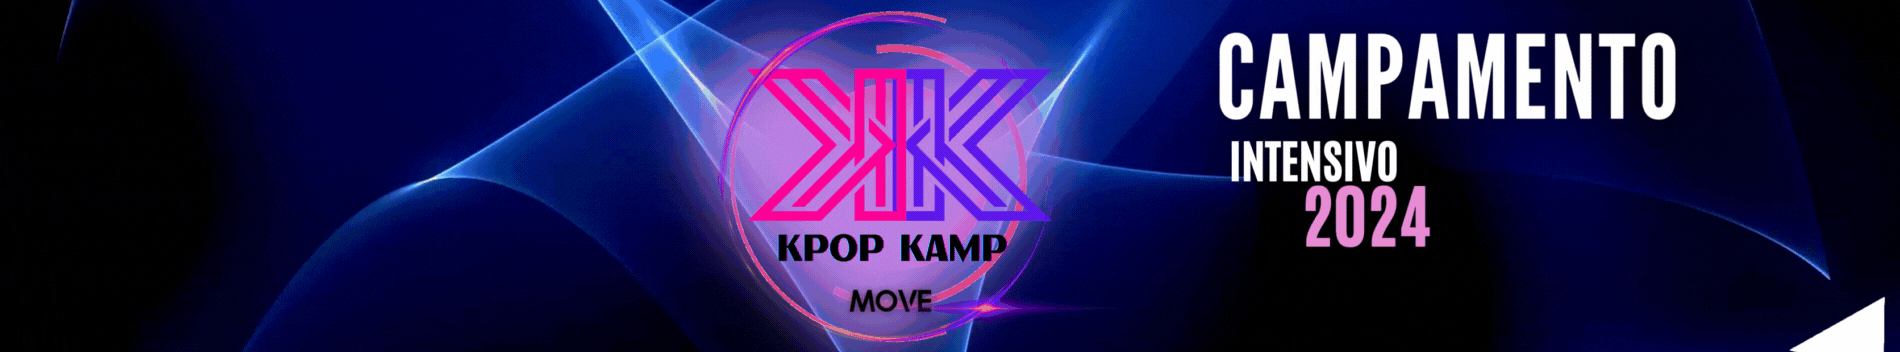 Banner Kpop Kamp